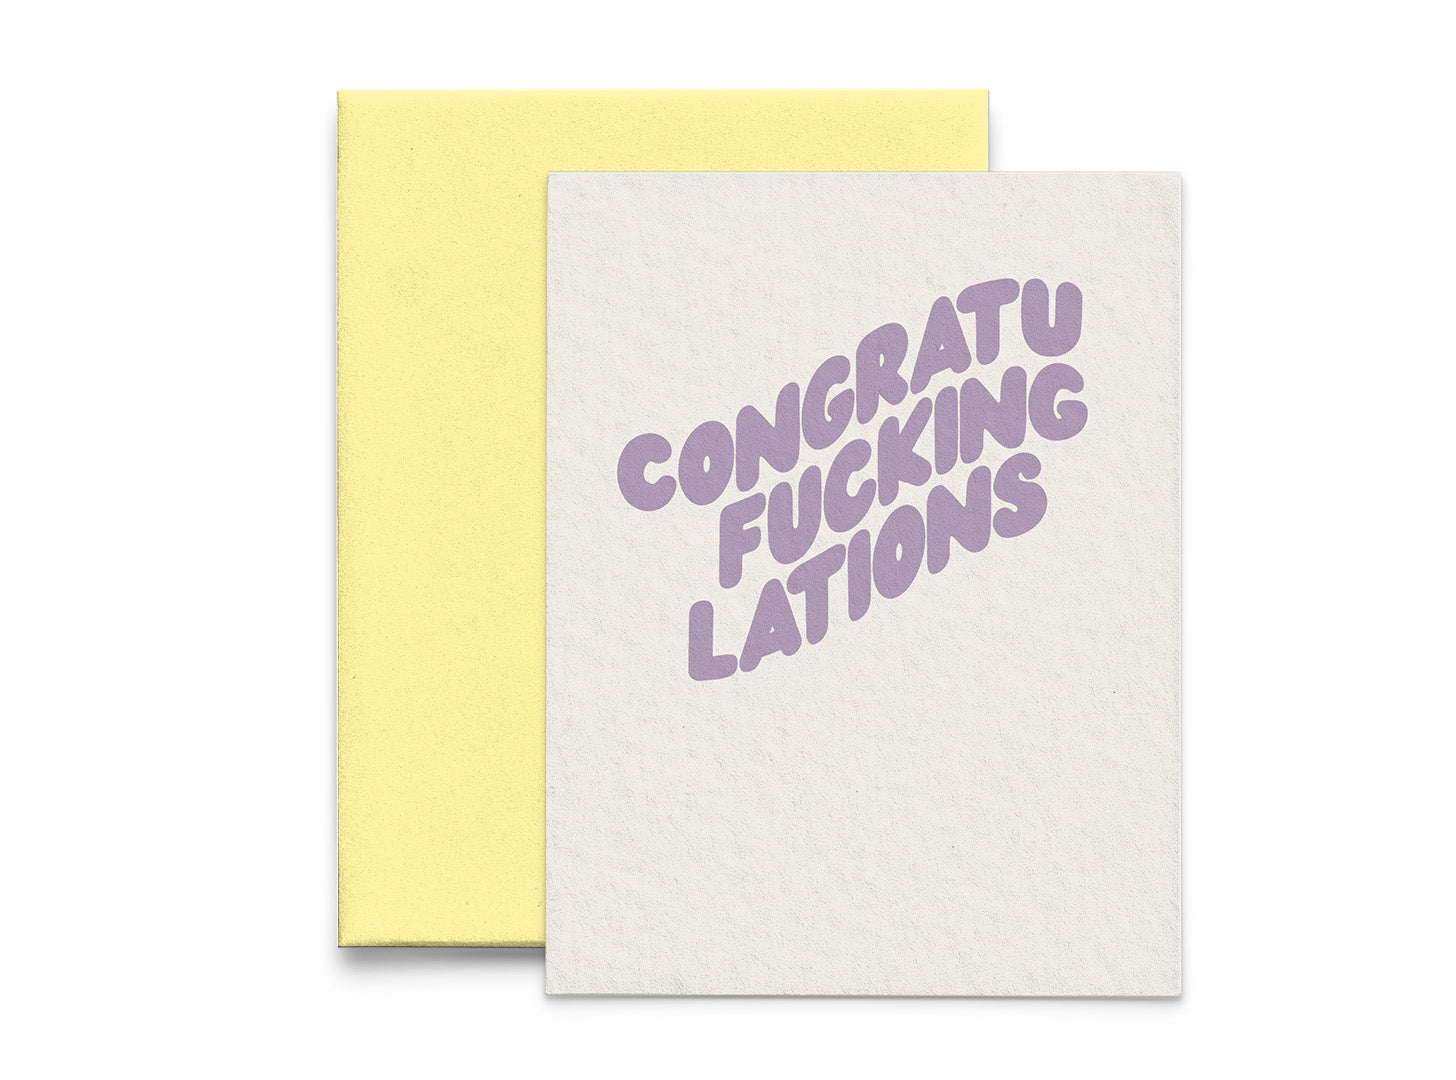 Congratu-fucking-lations Congratulations Greeting Card